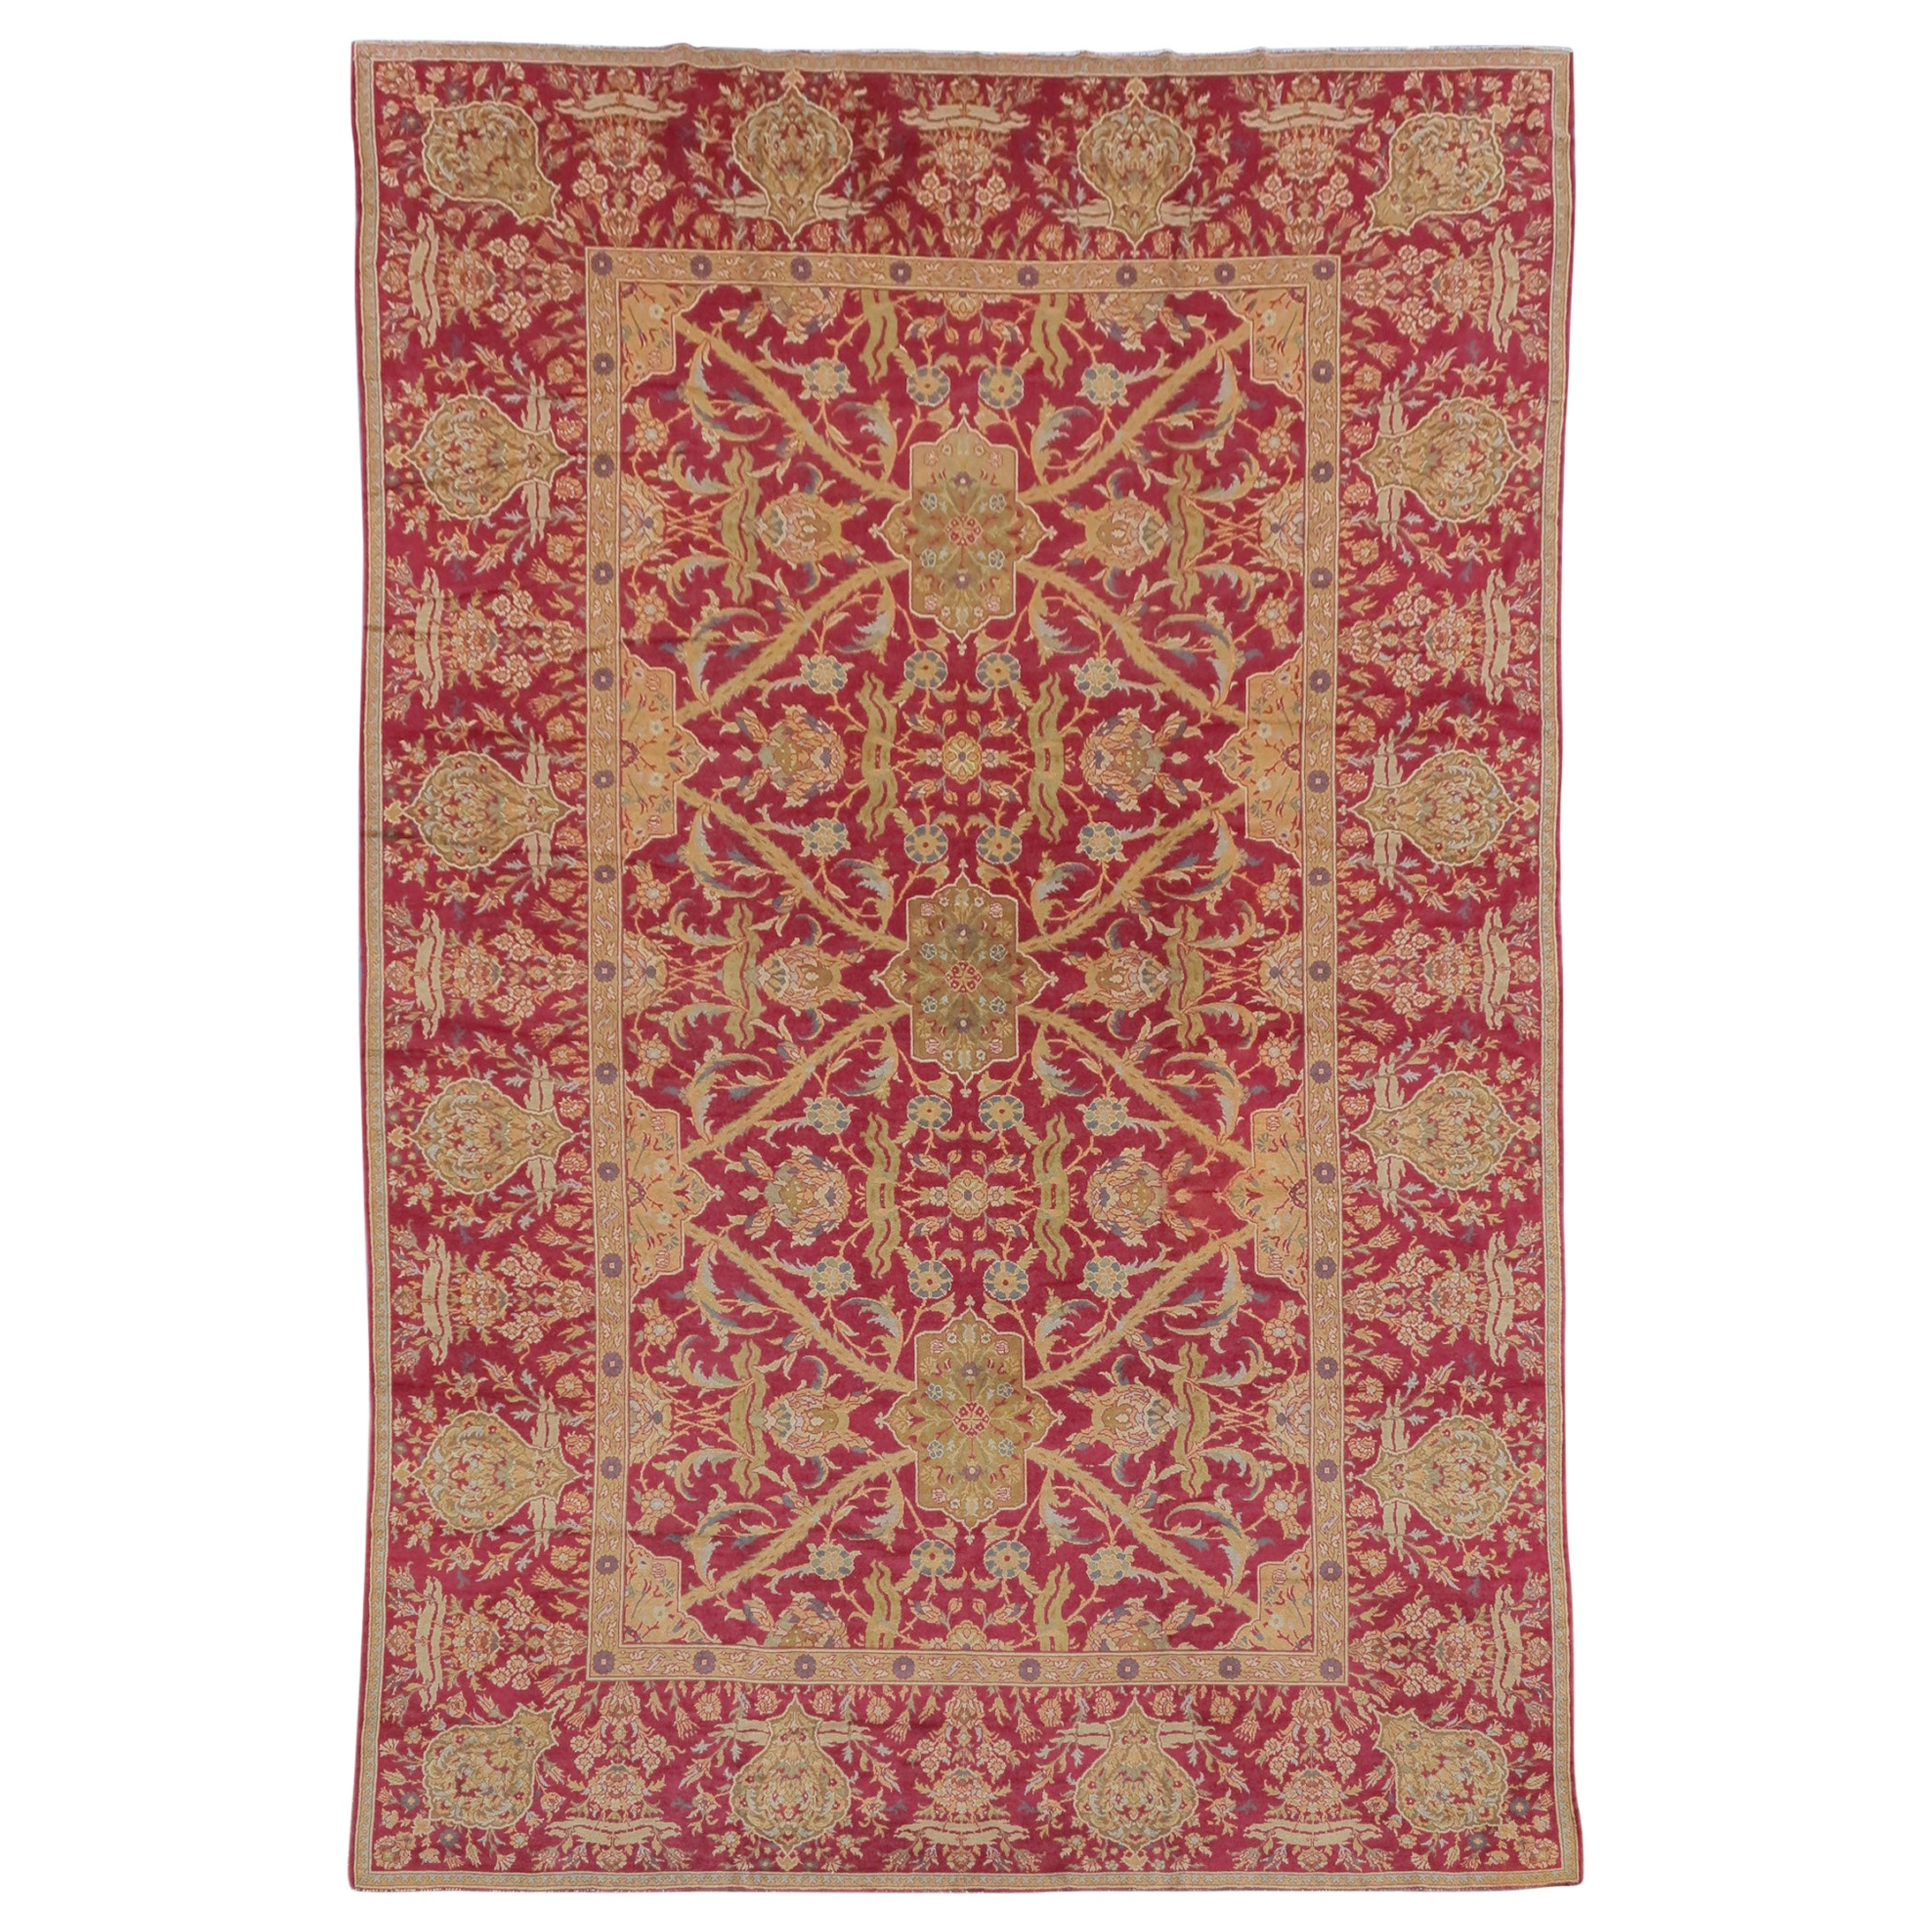 Antique Ottoman-Style Carpet, Late 19th Century